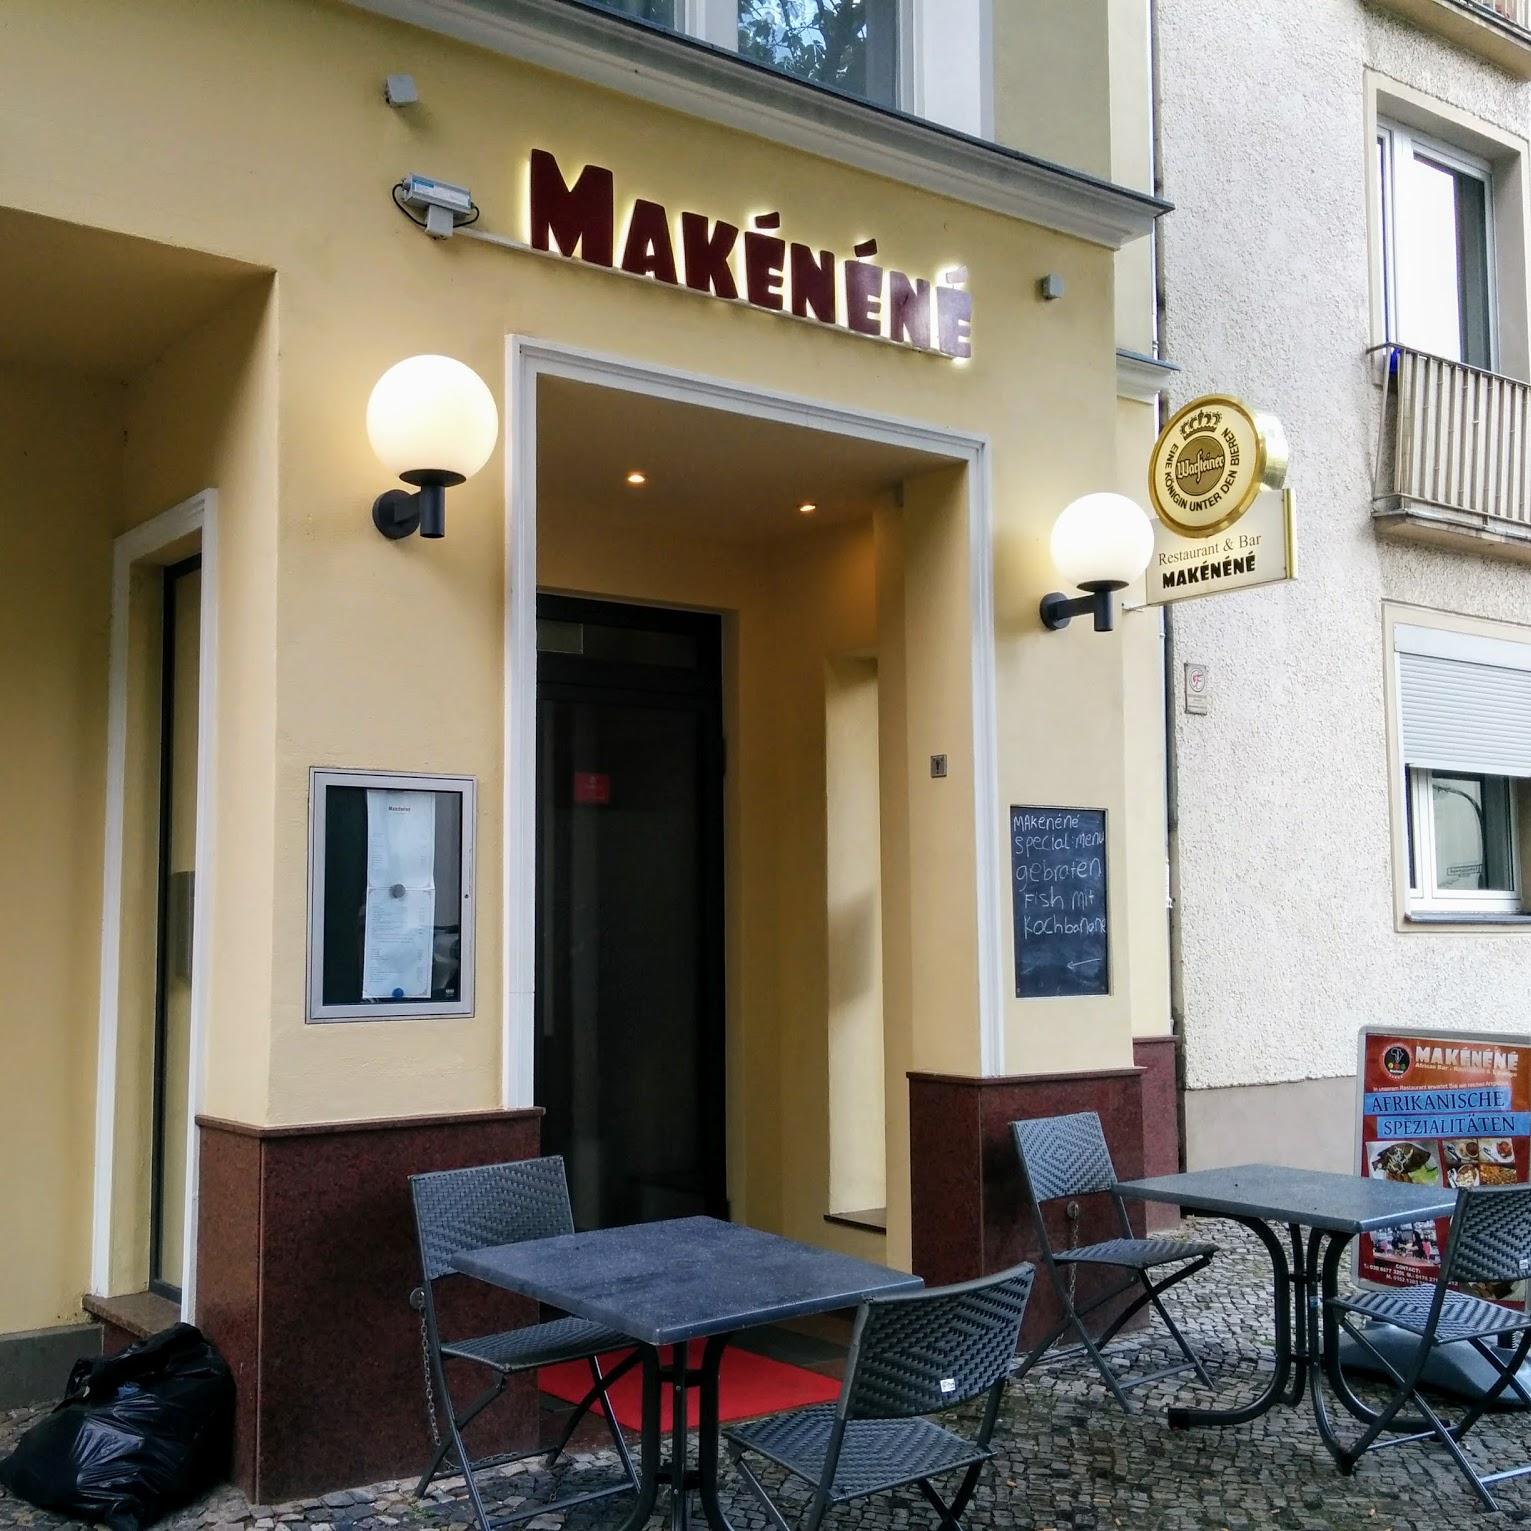 Restaurant "Makenene Lounge" in Berlin